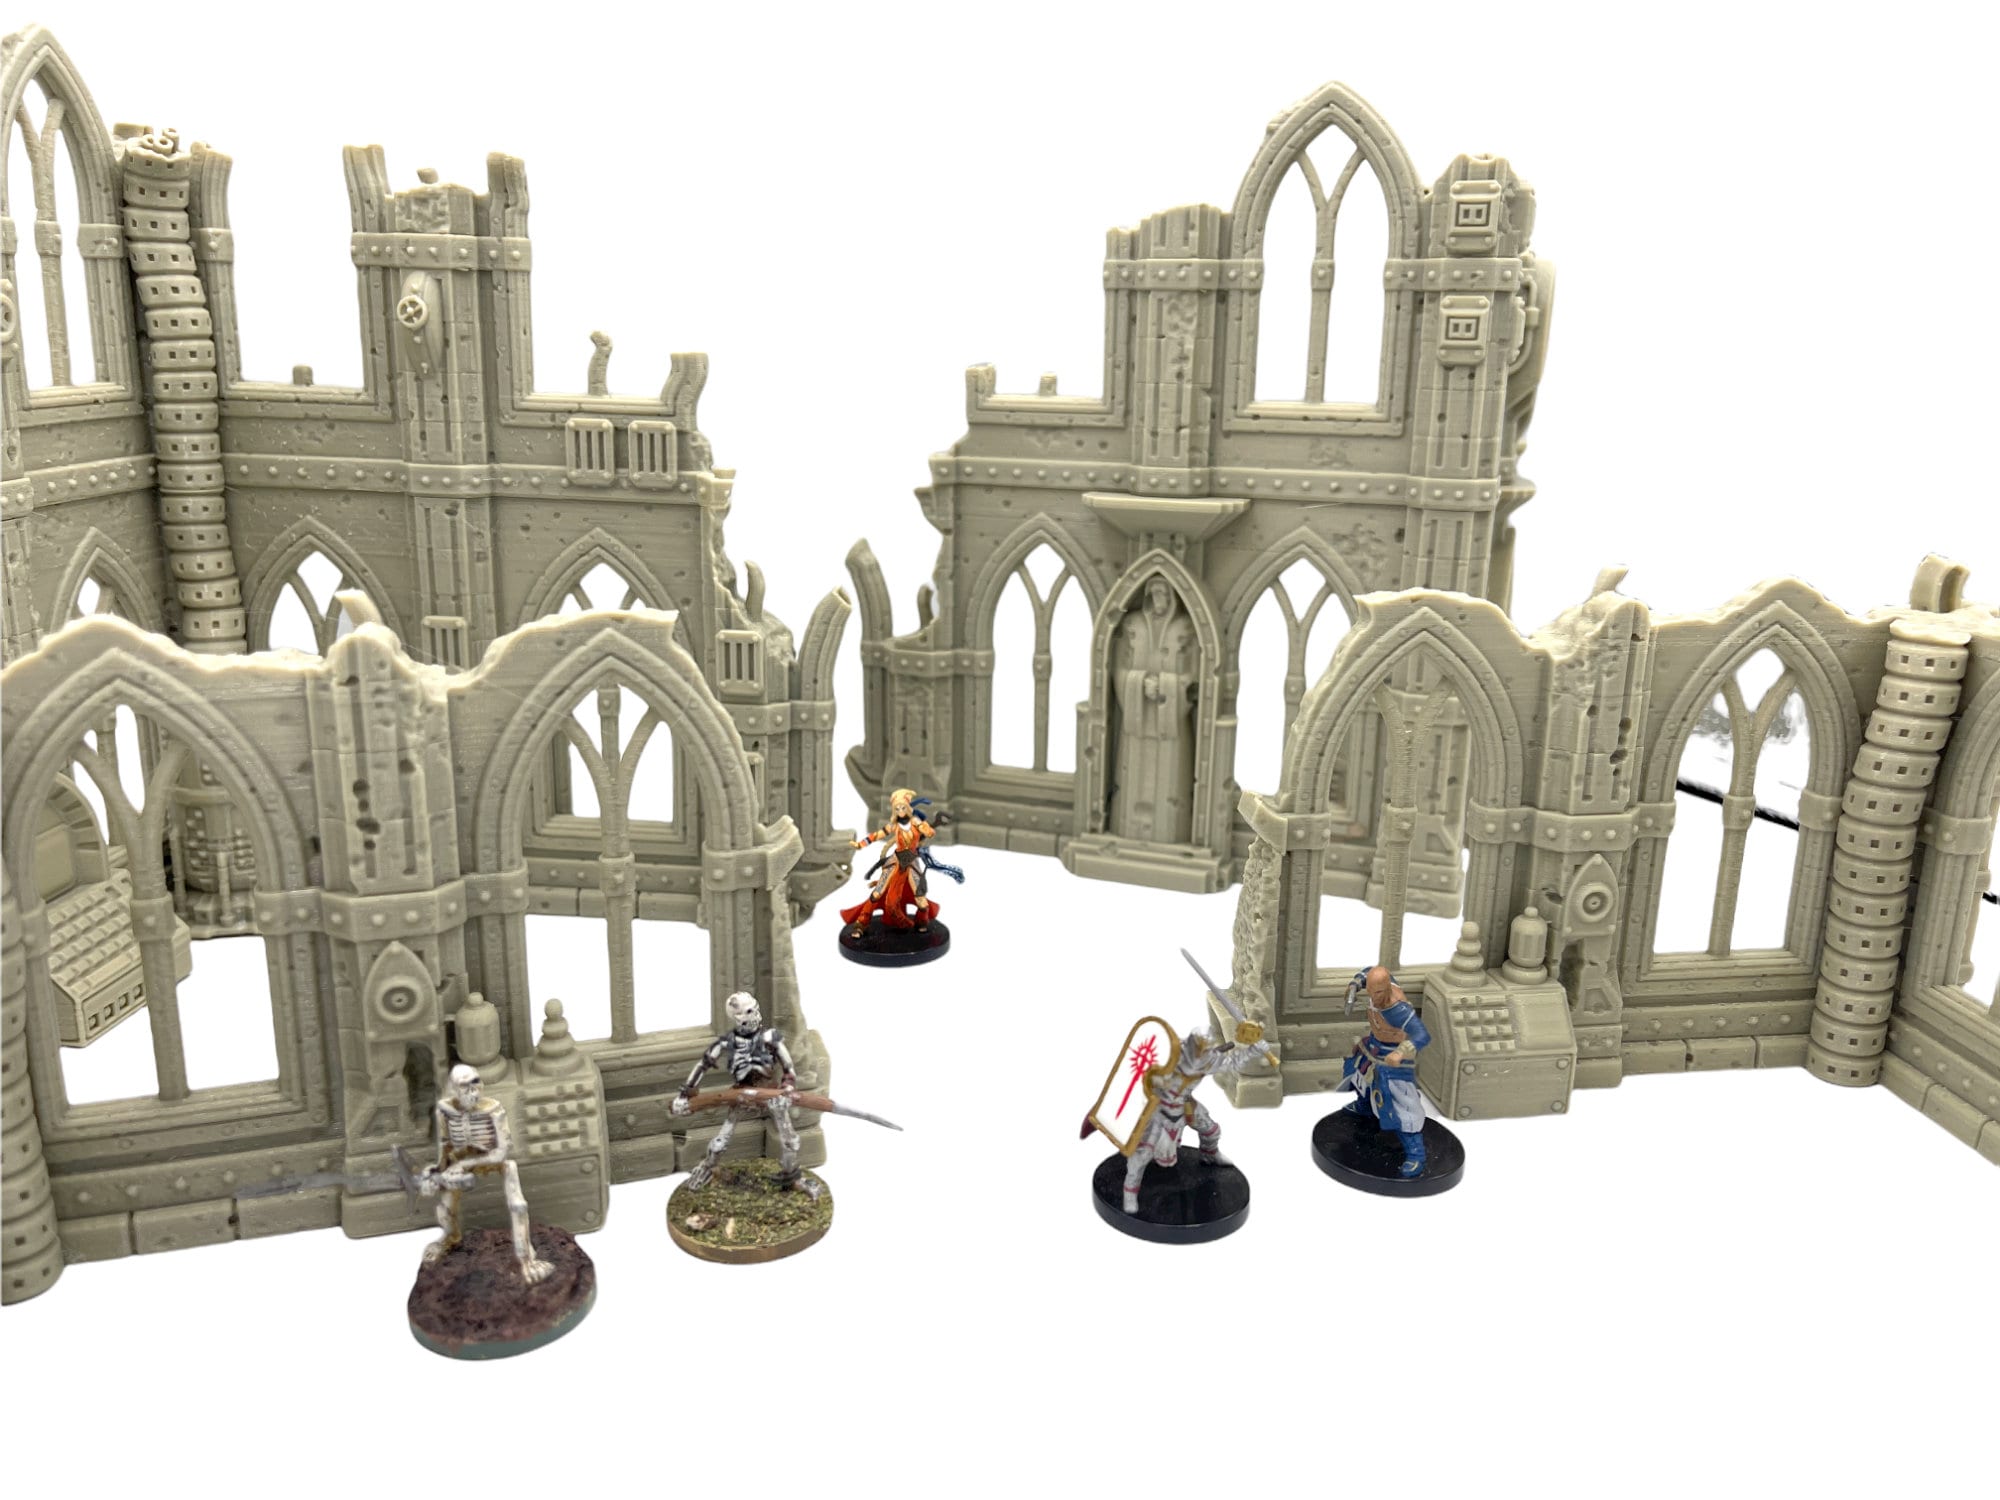 Grim Dark Ruins Set 2 / Terrain 4 Print / RPG and Wargame 3d Printed Tabletop Terrain / Licensed Printer